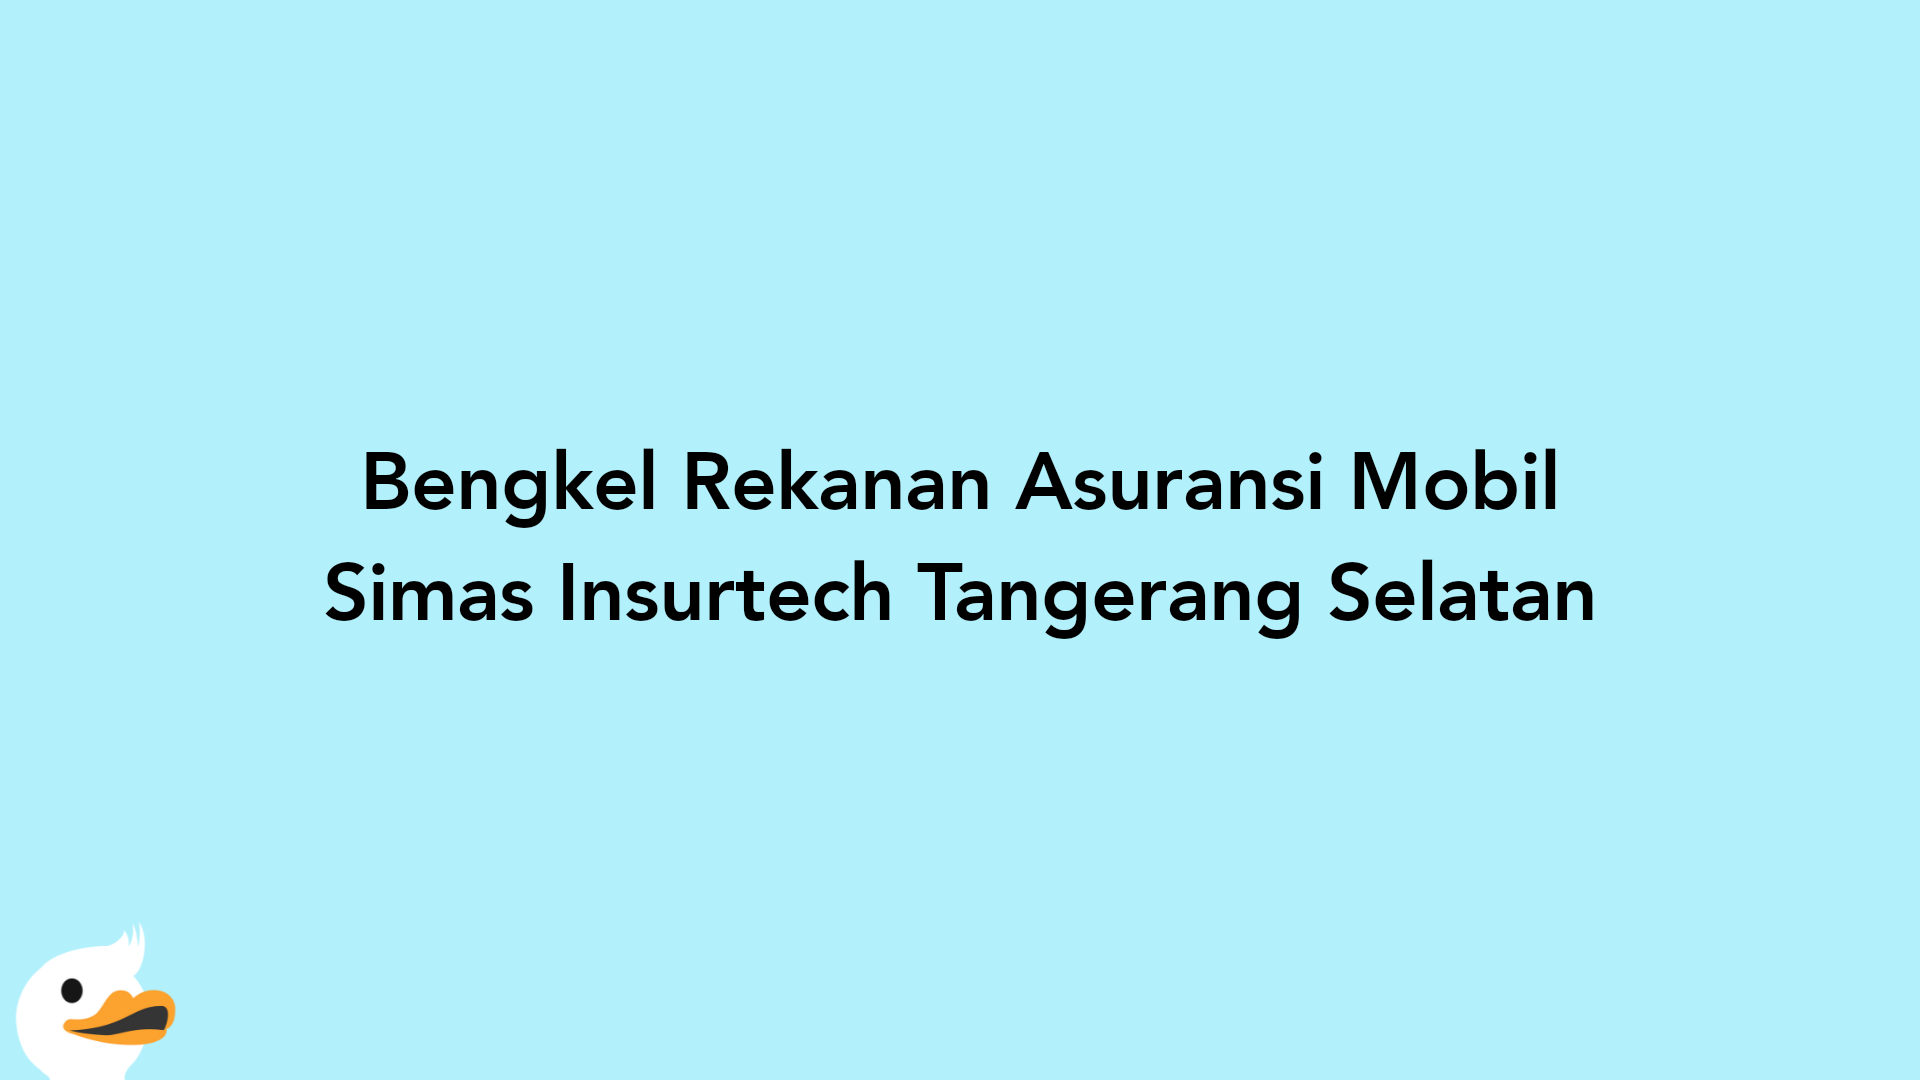 Bengkel Rekanan Asuransi Mobil Simas Insurtech Tangerang Selatan